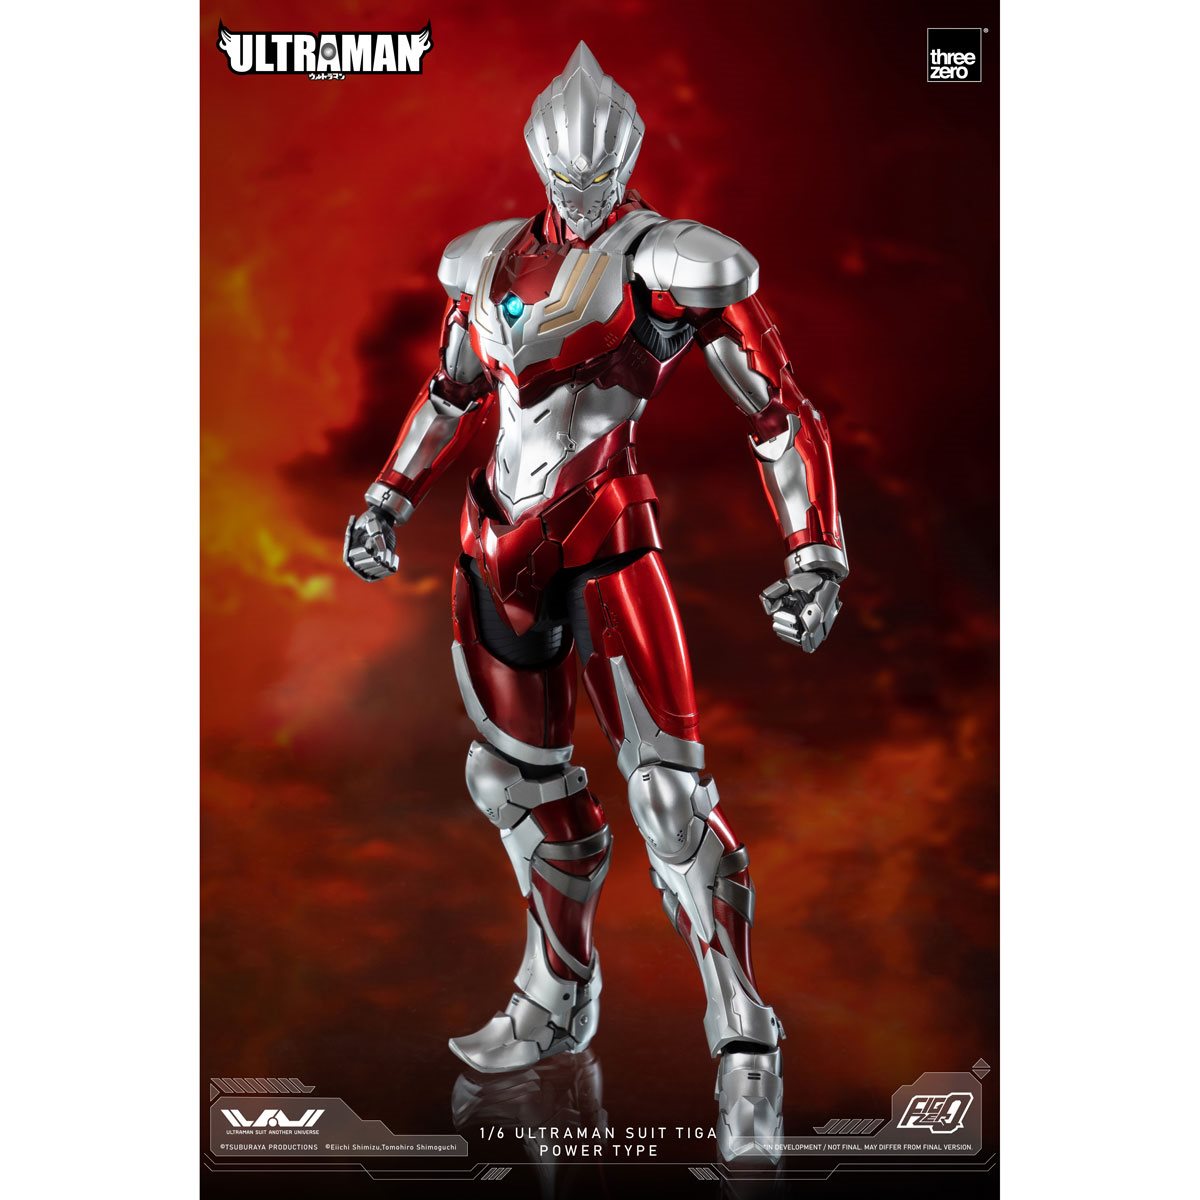 Ultraman Suit - Ultraman 1/6th Scale Figure Threezero Tiga Power Type FigZero